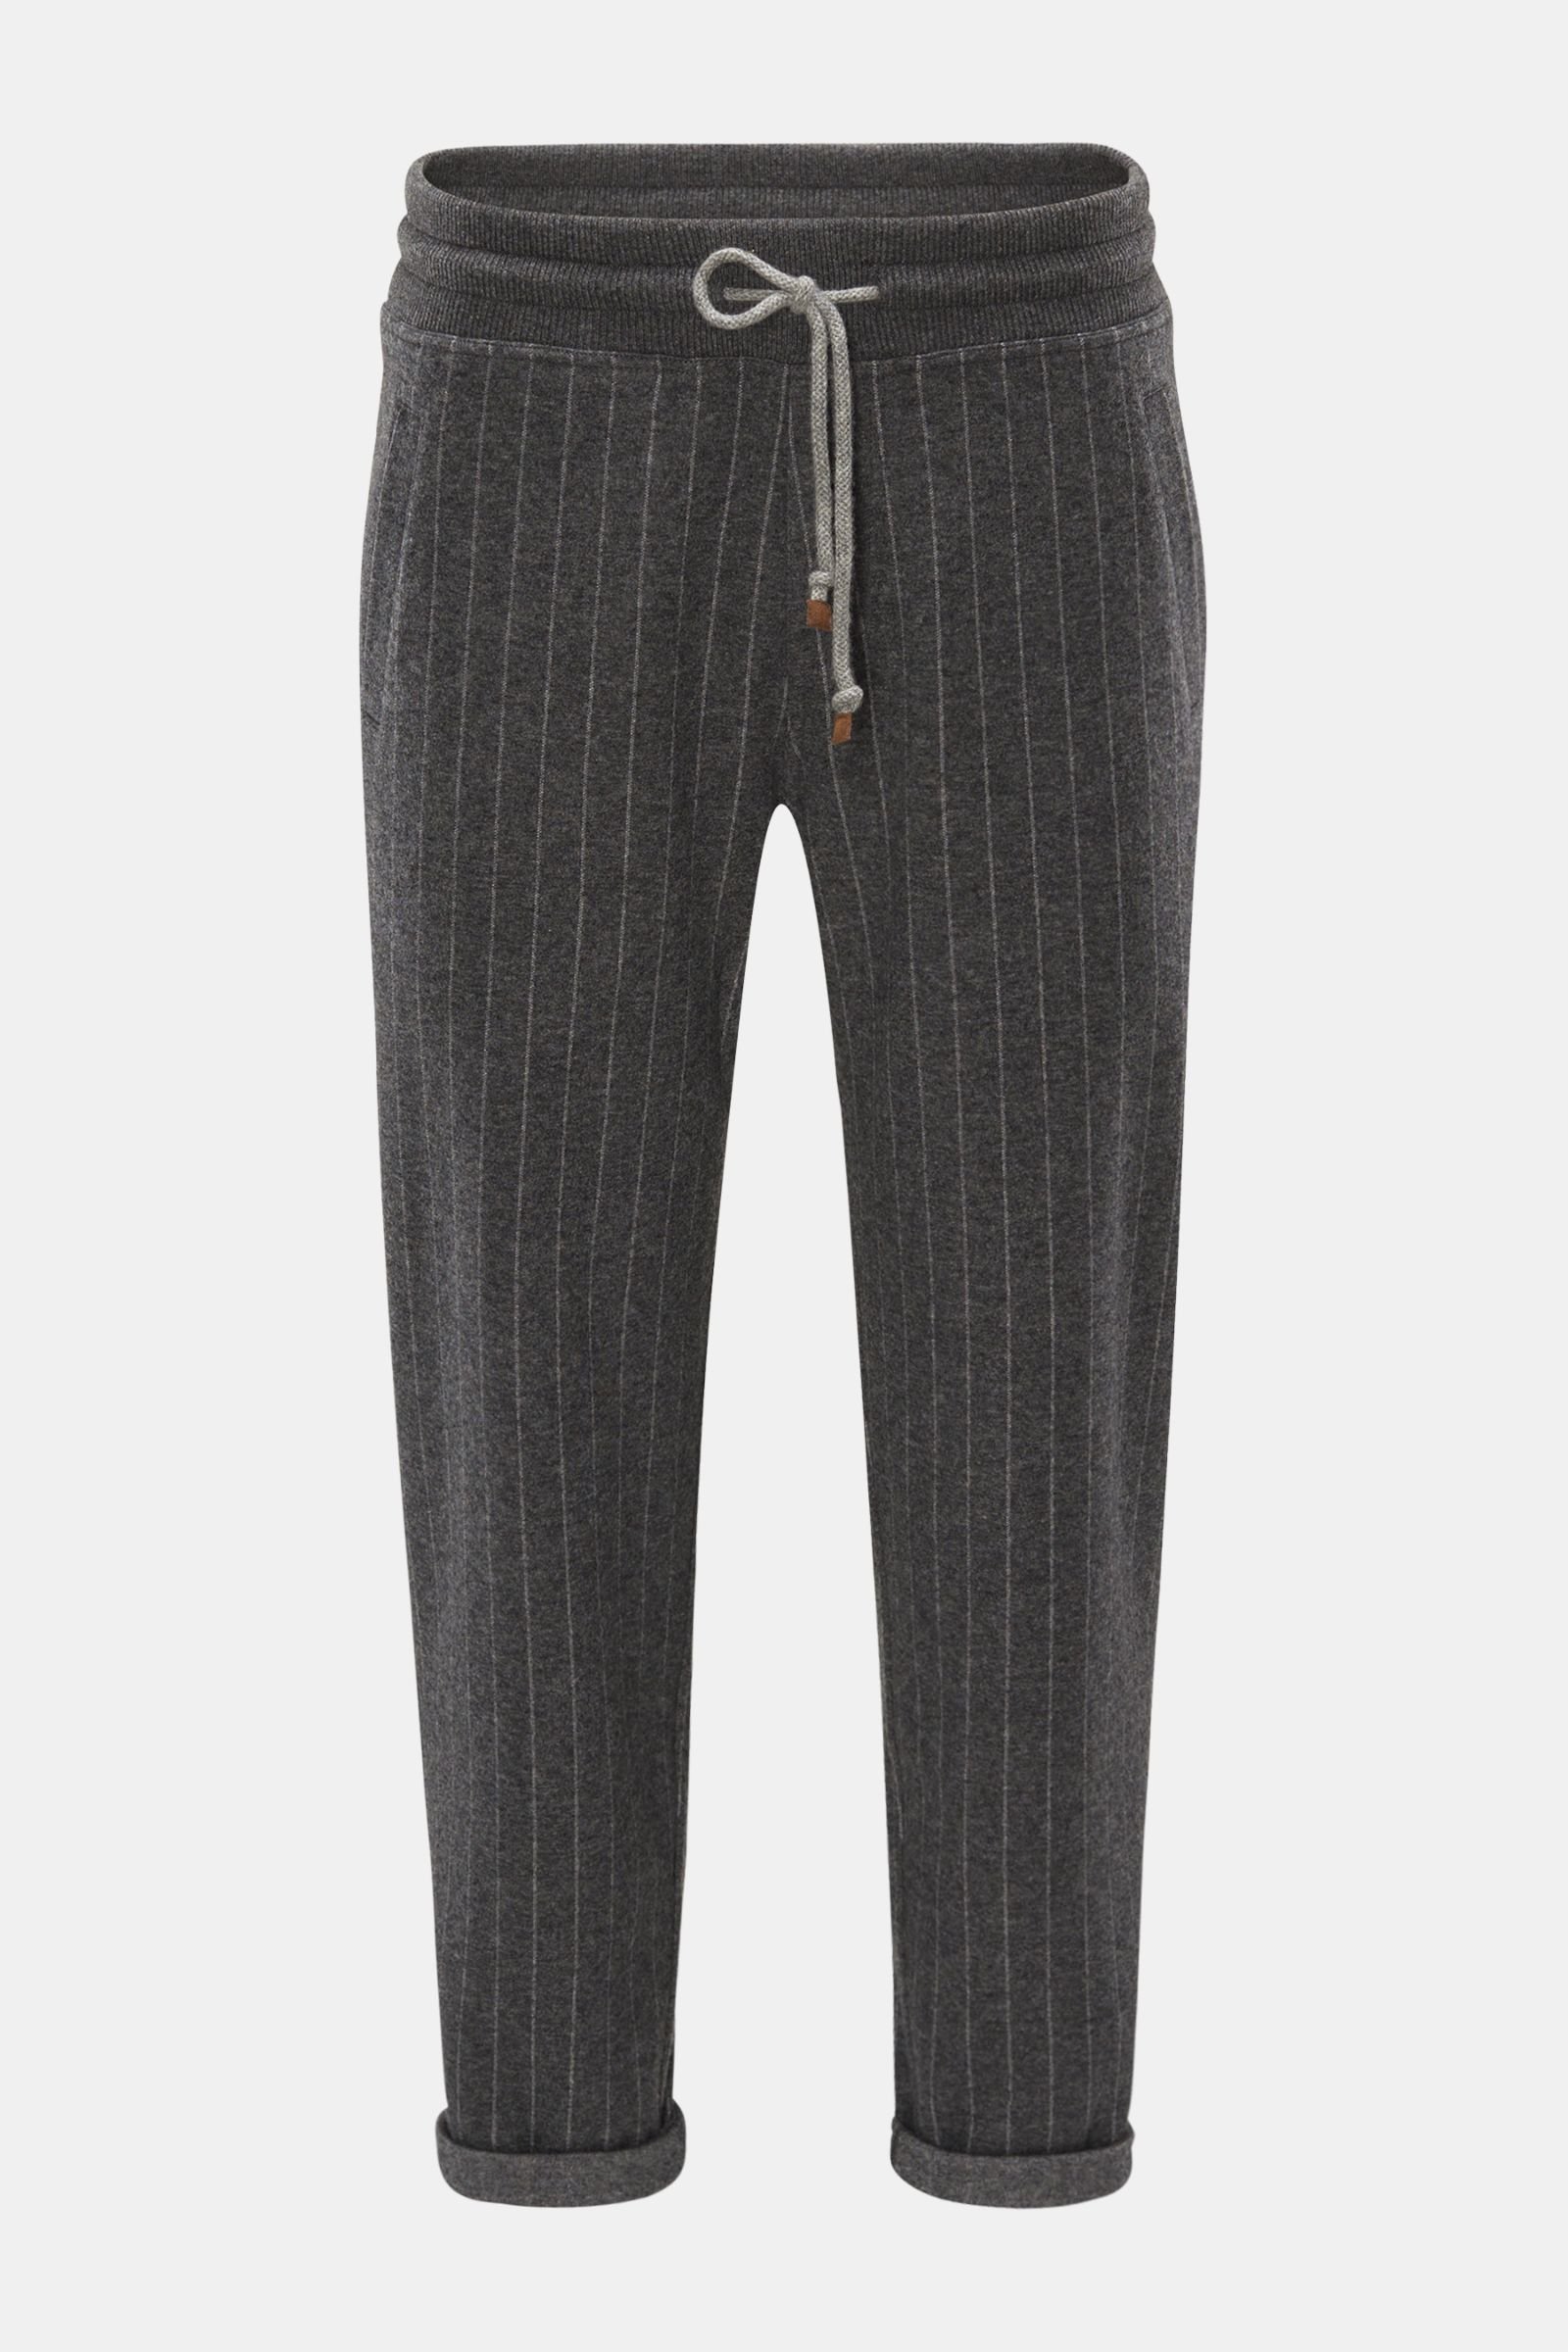 Sweat pants dark grey/grey striped